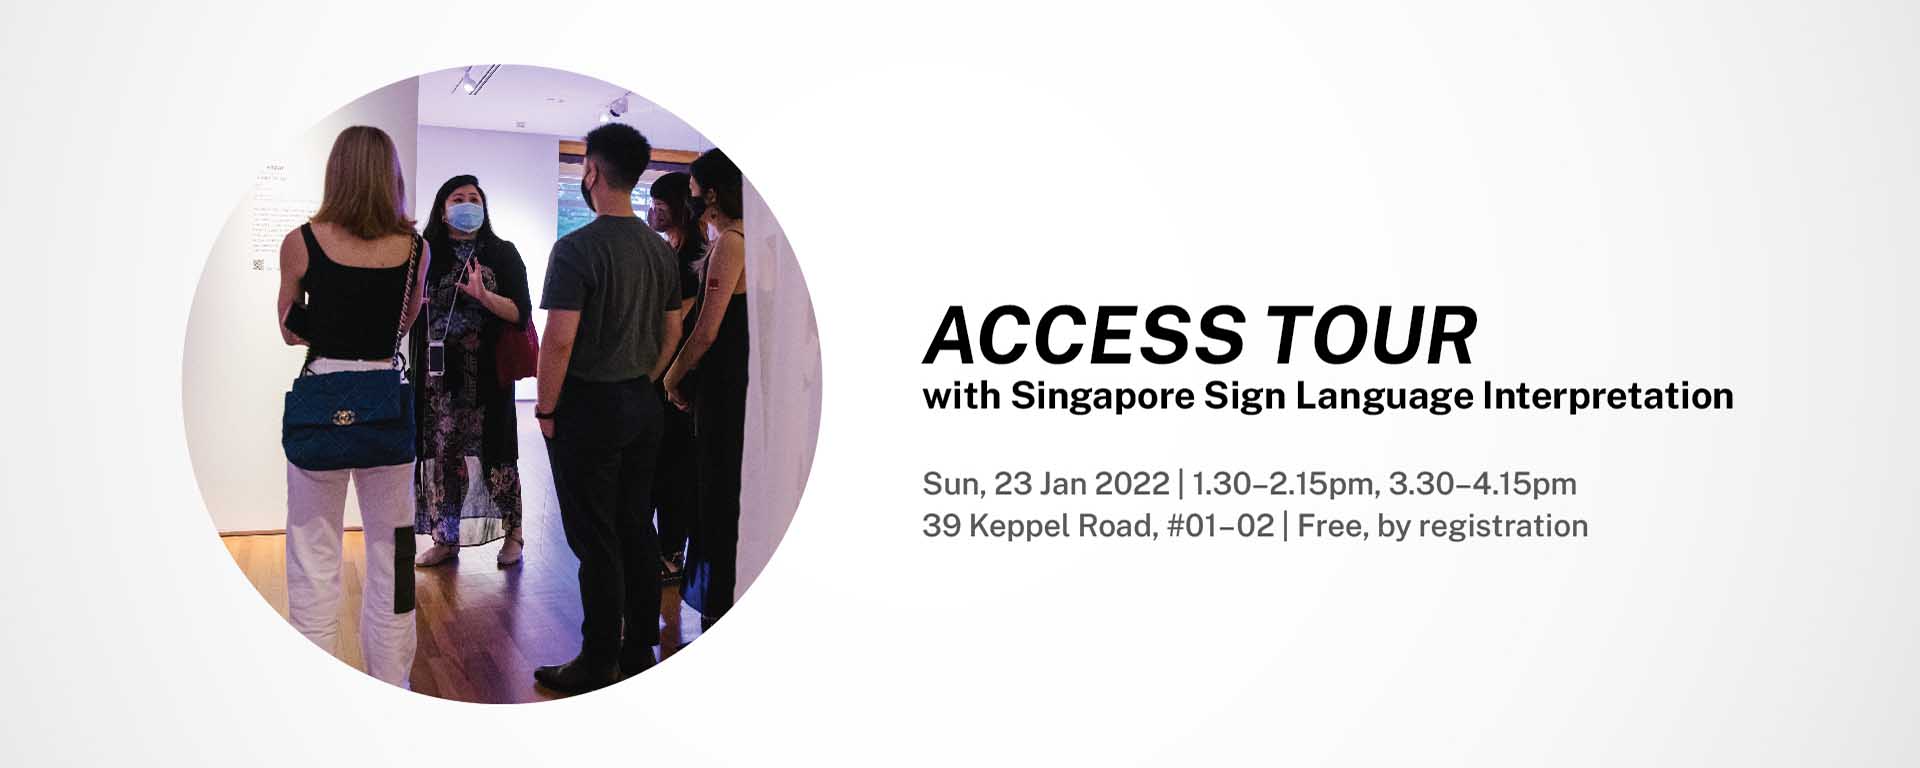 Access Tour with Singapore Sign Language Interpretation